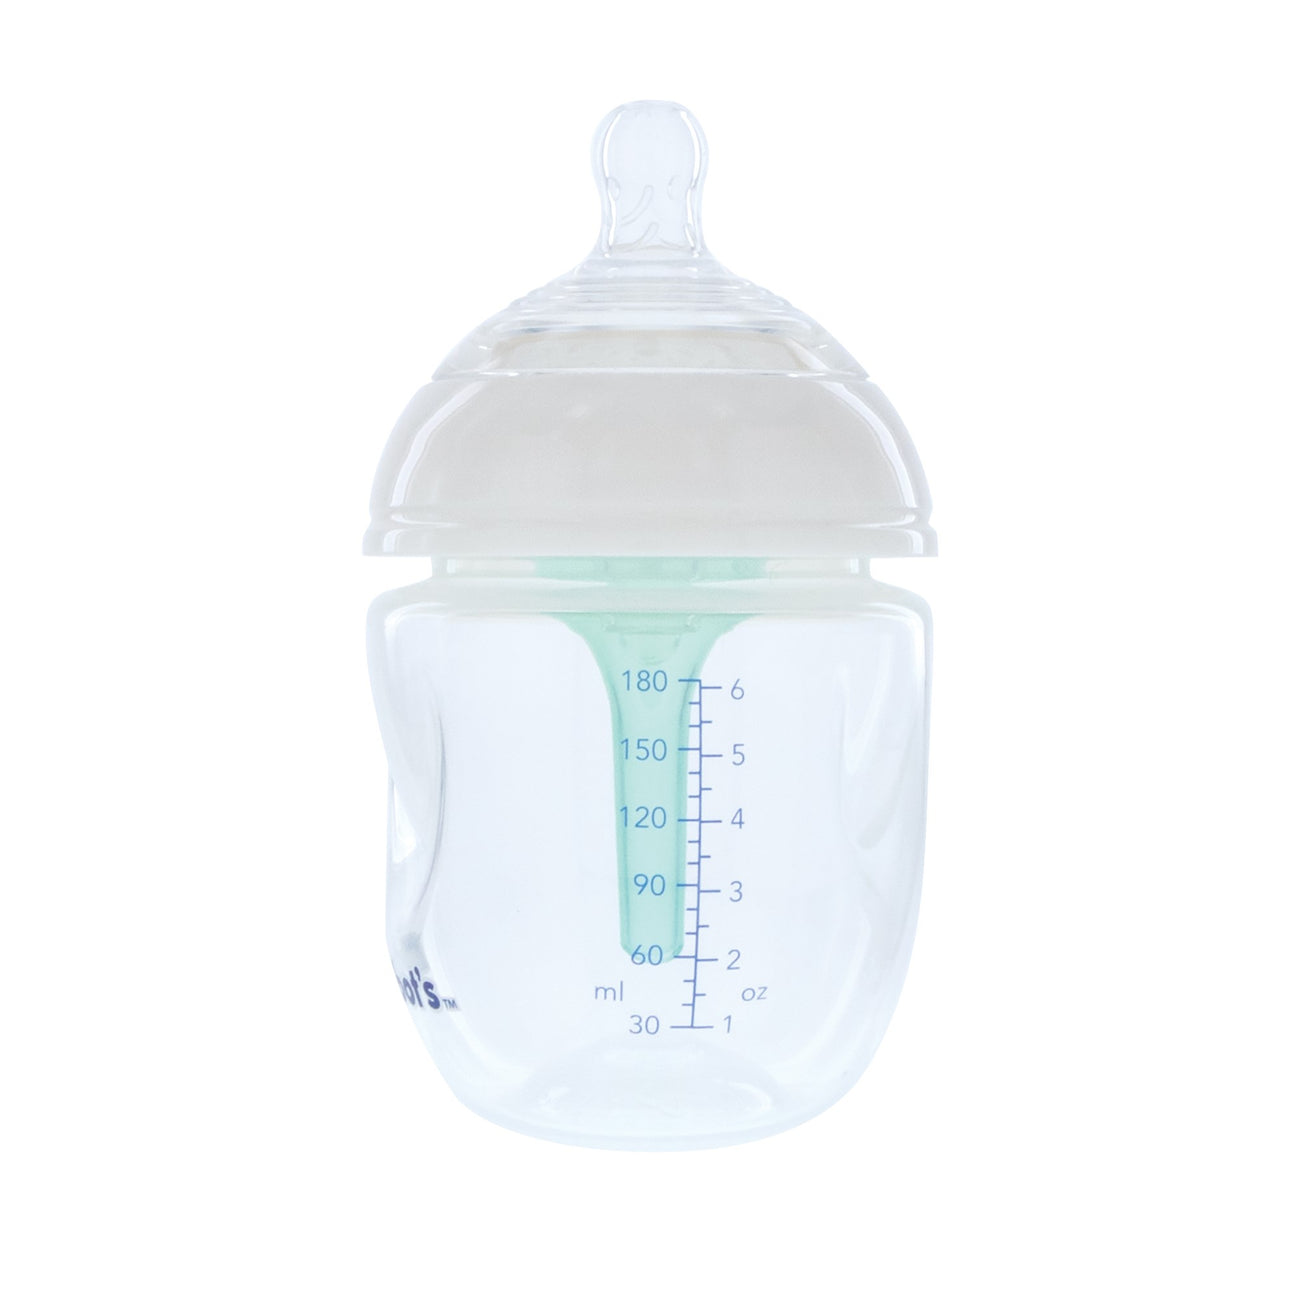 Self-Sterilizing Anti-Colic Bottle - 6 oz